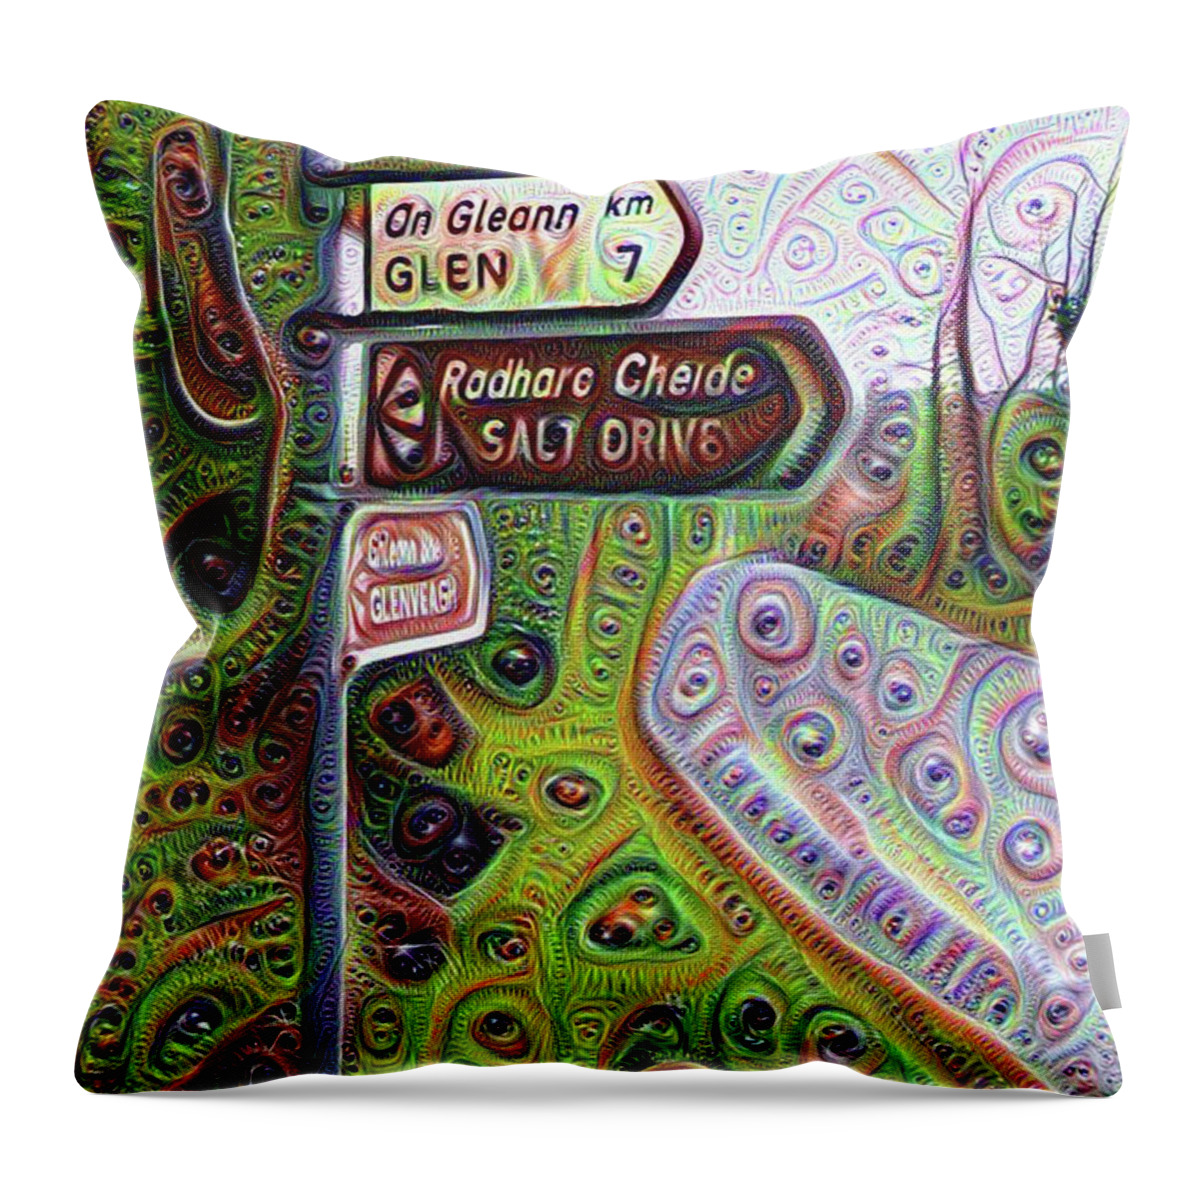 Salt Throw Pillow featuring the digital art Salt Drive Road sign - Donegal Ireland by Bill Cannon